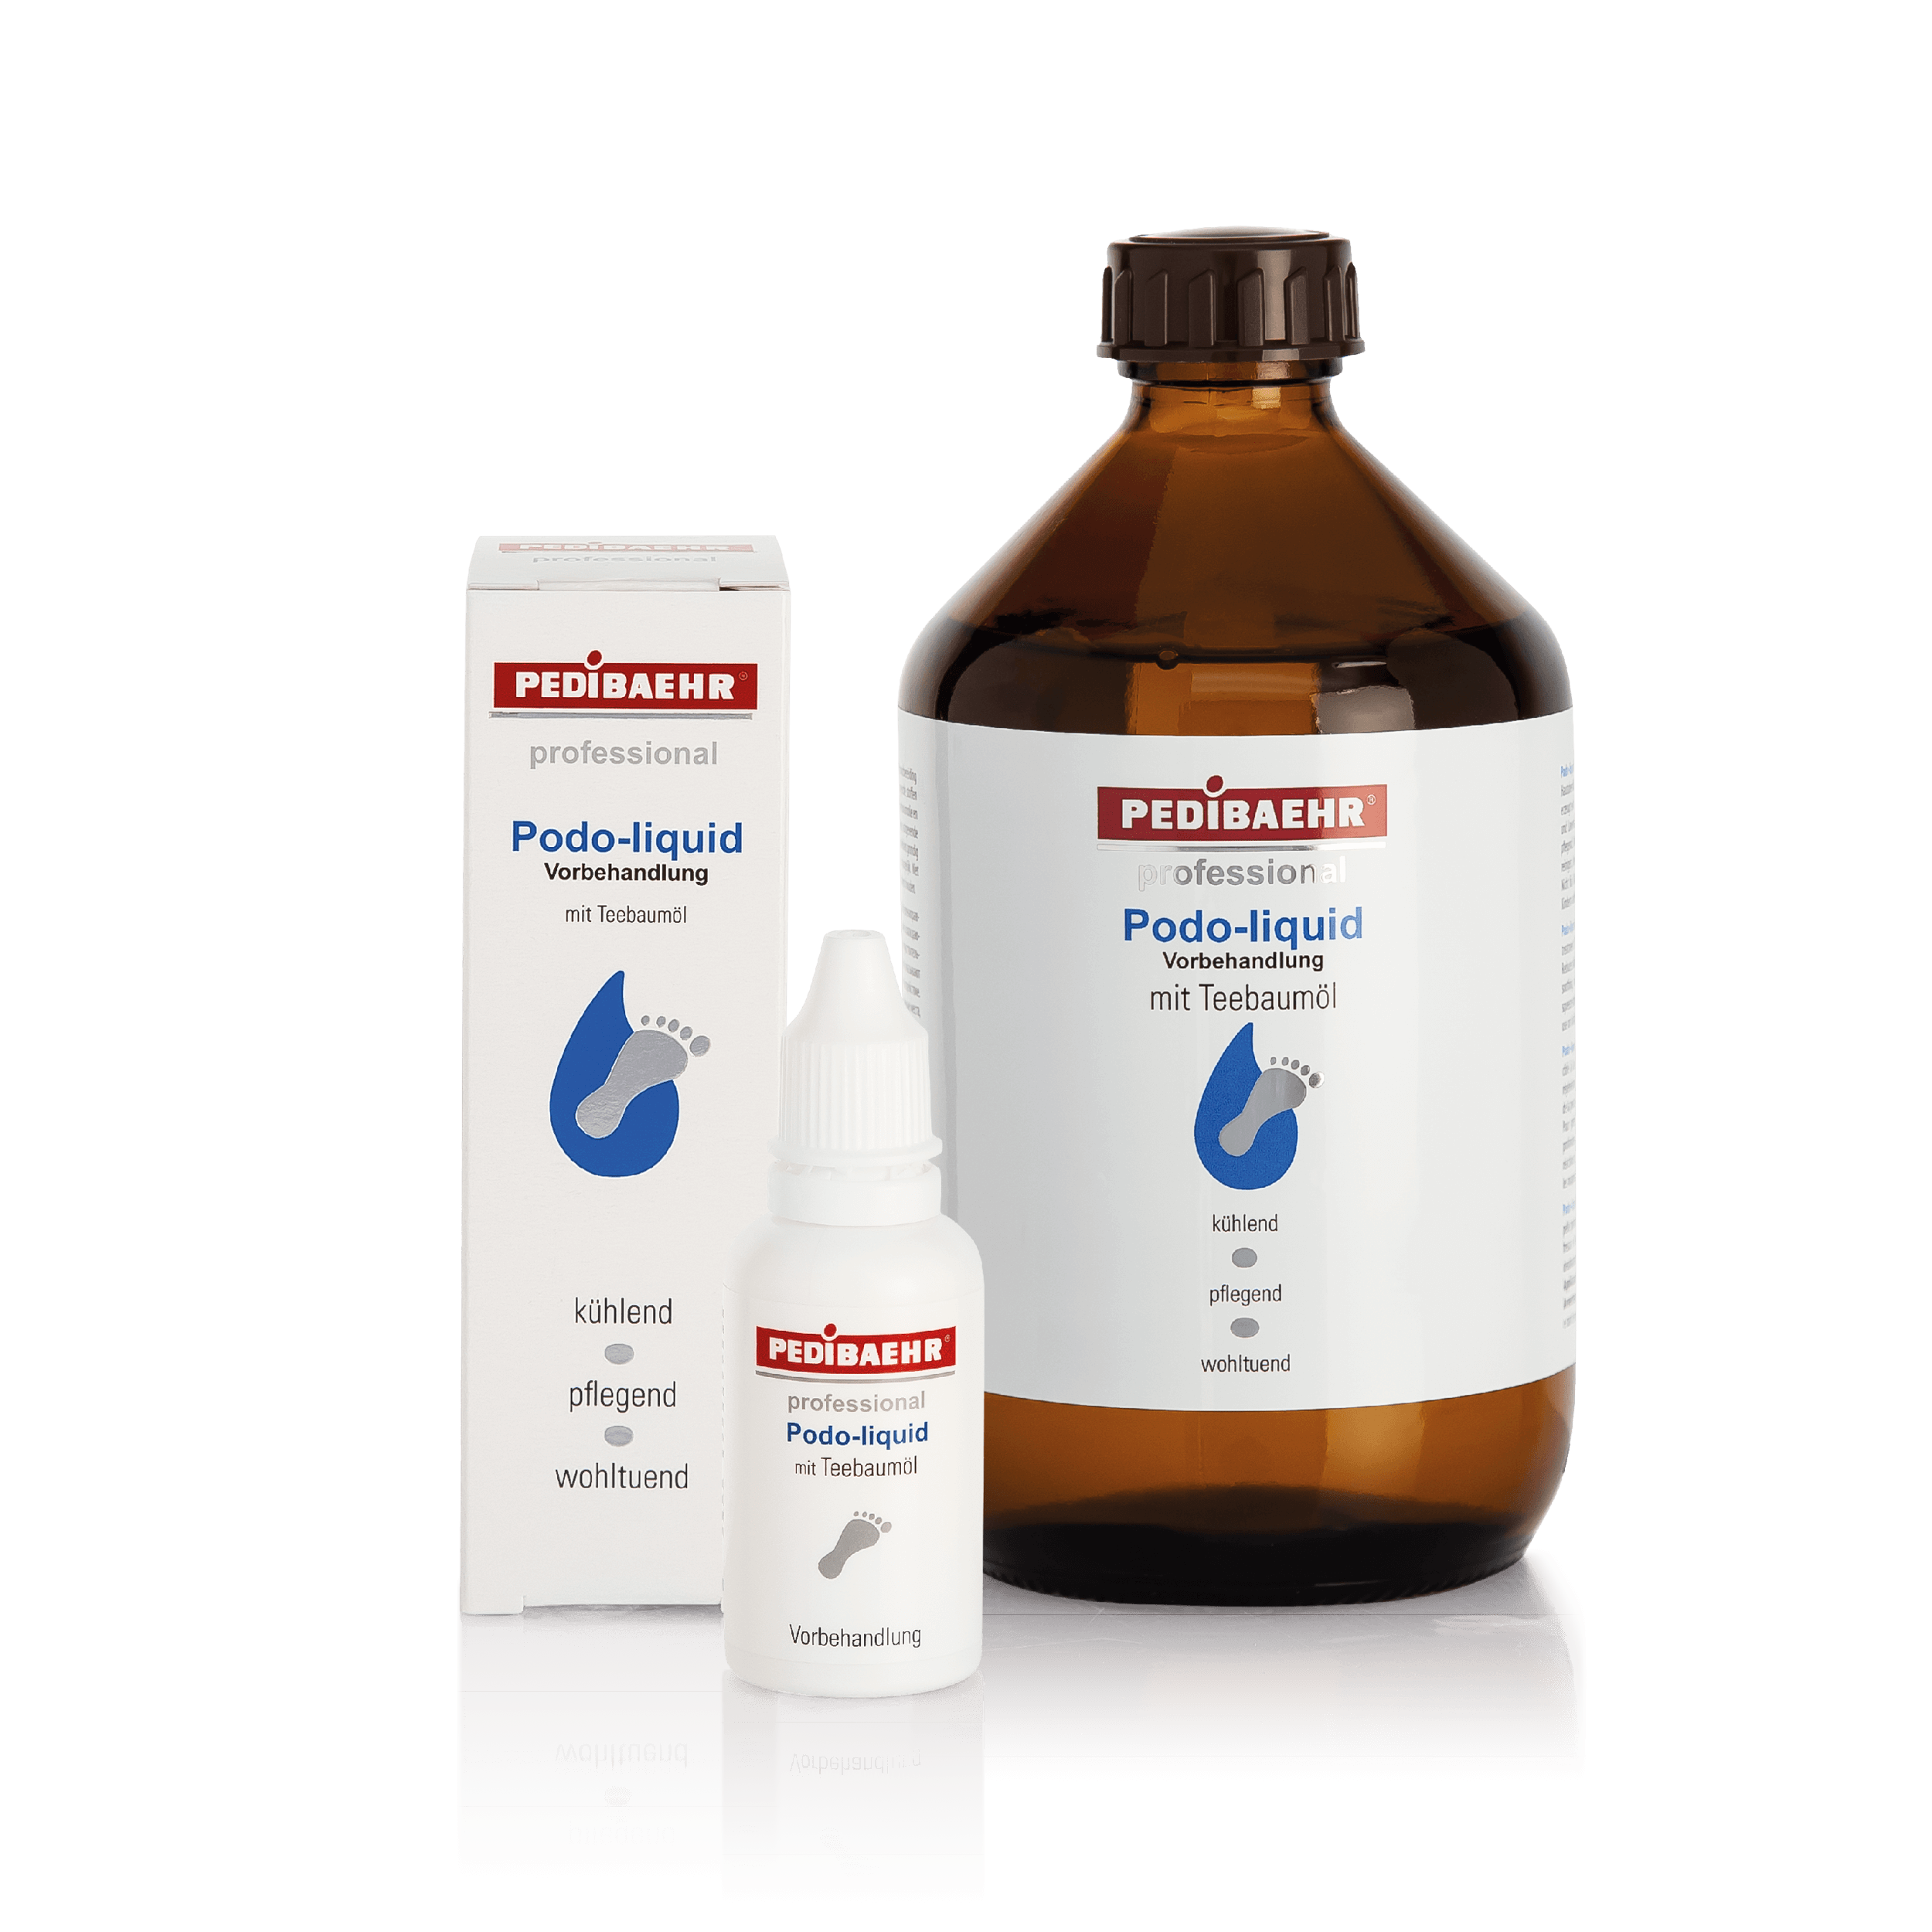 pedibaehr-podo-liquid-mit-teebaumol-produkt